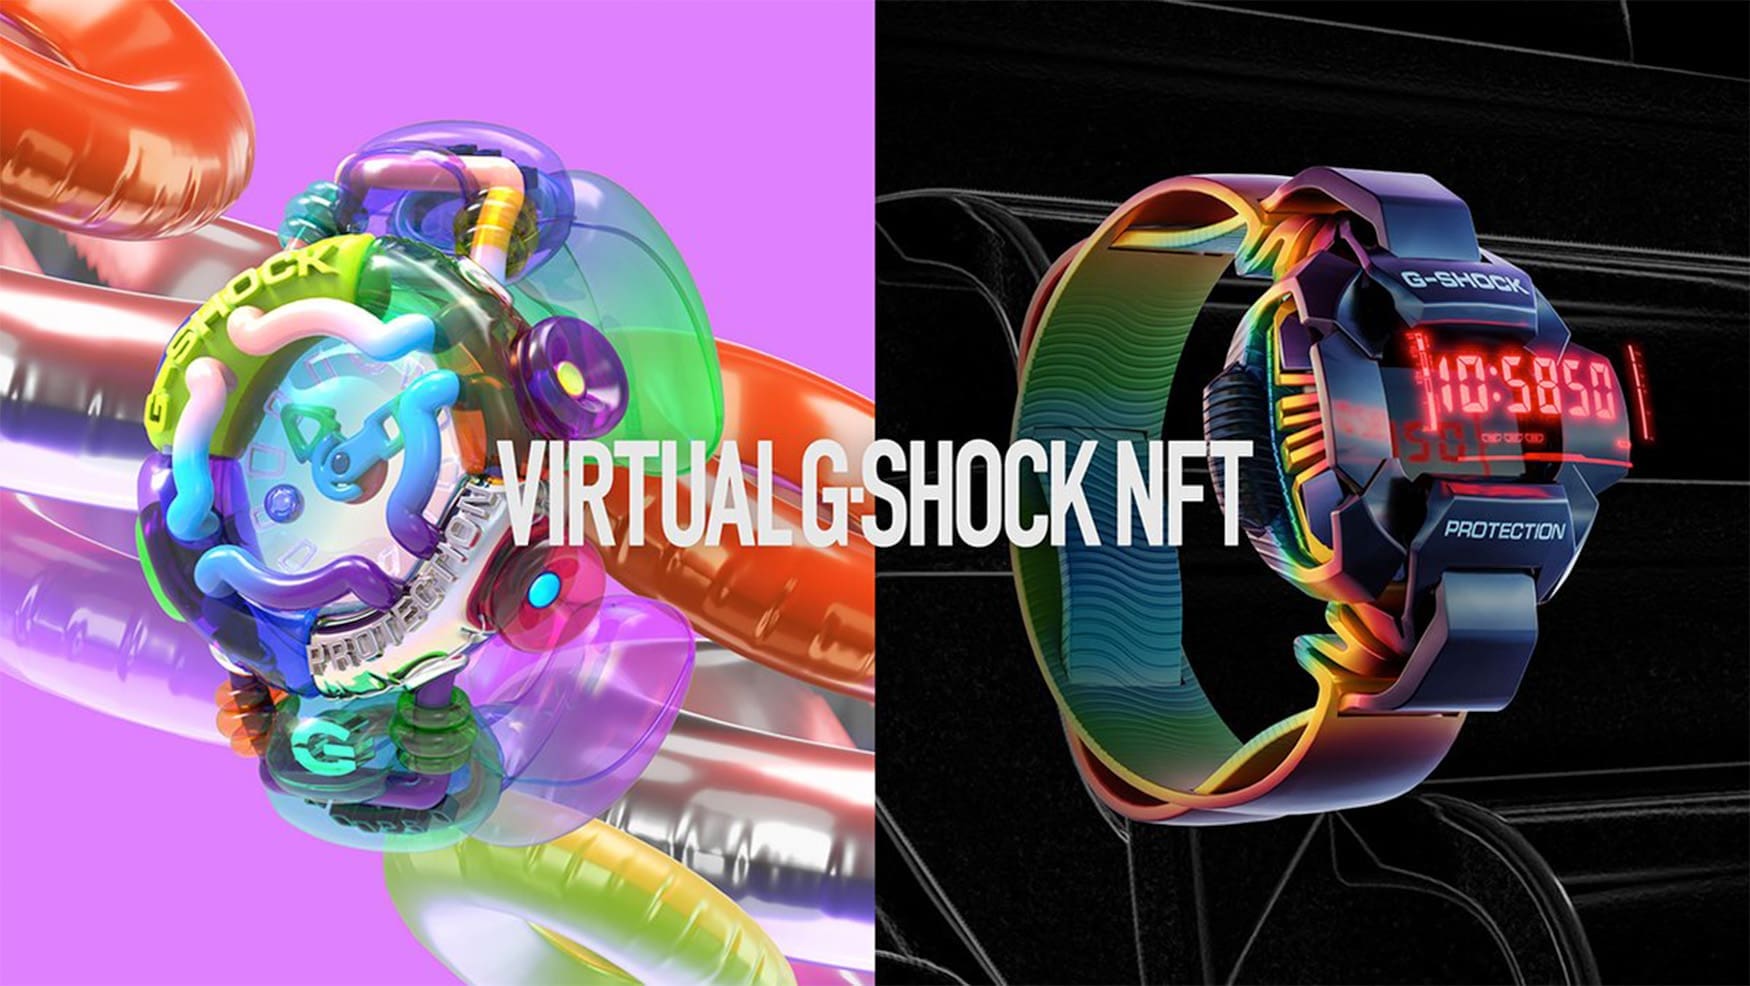 Digital Virtual G Shock NFT